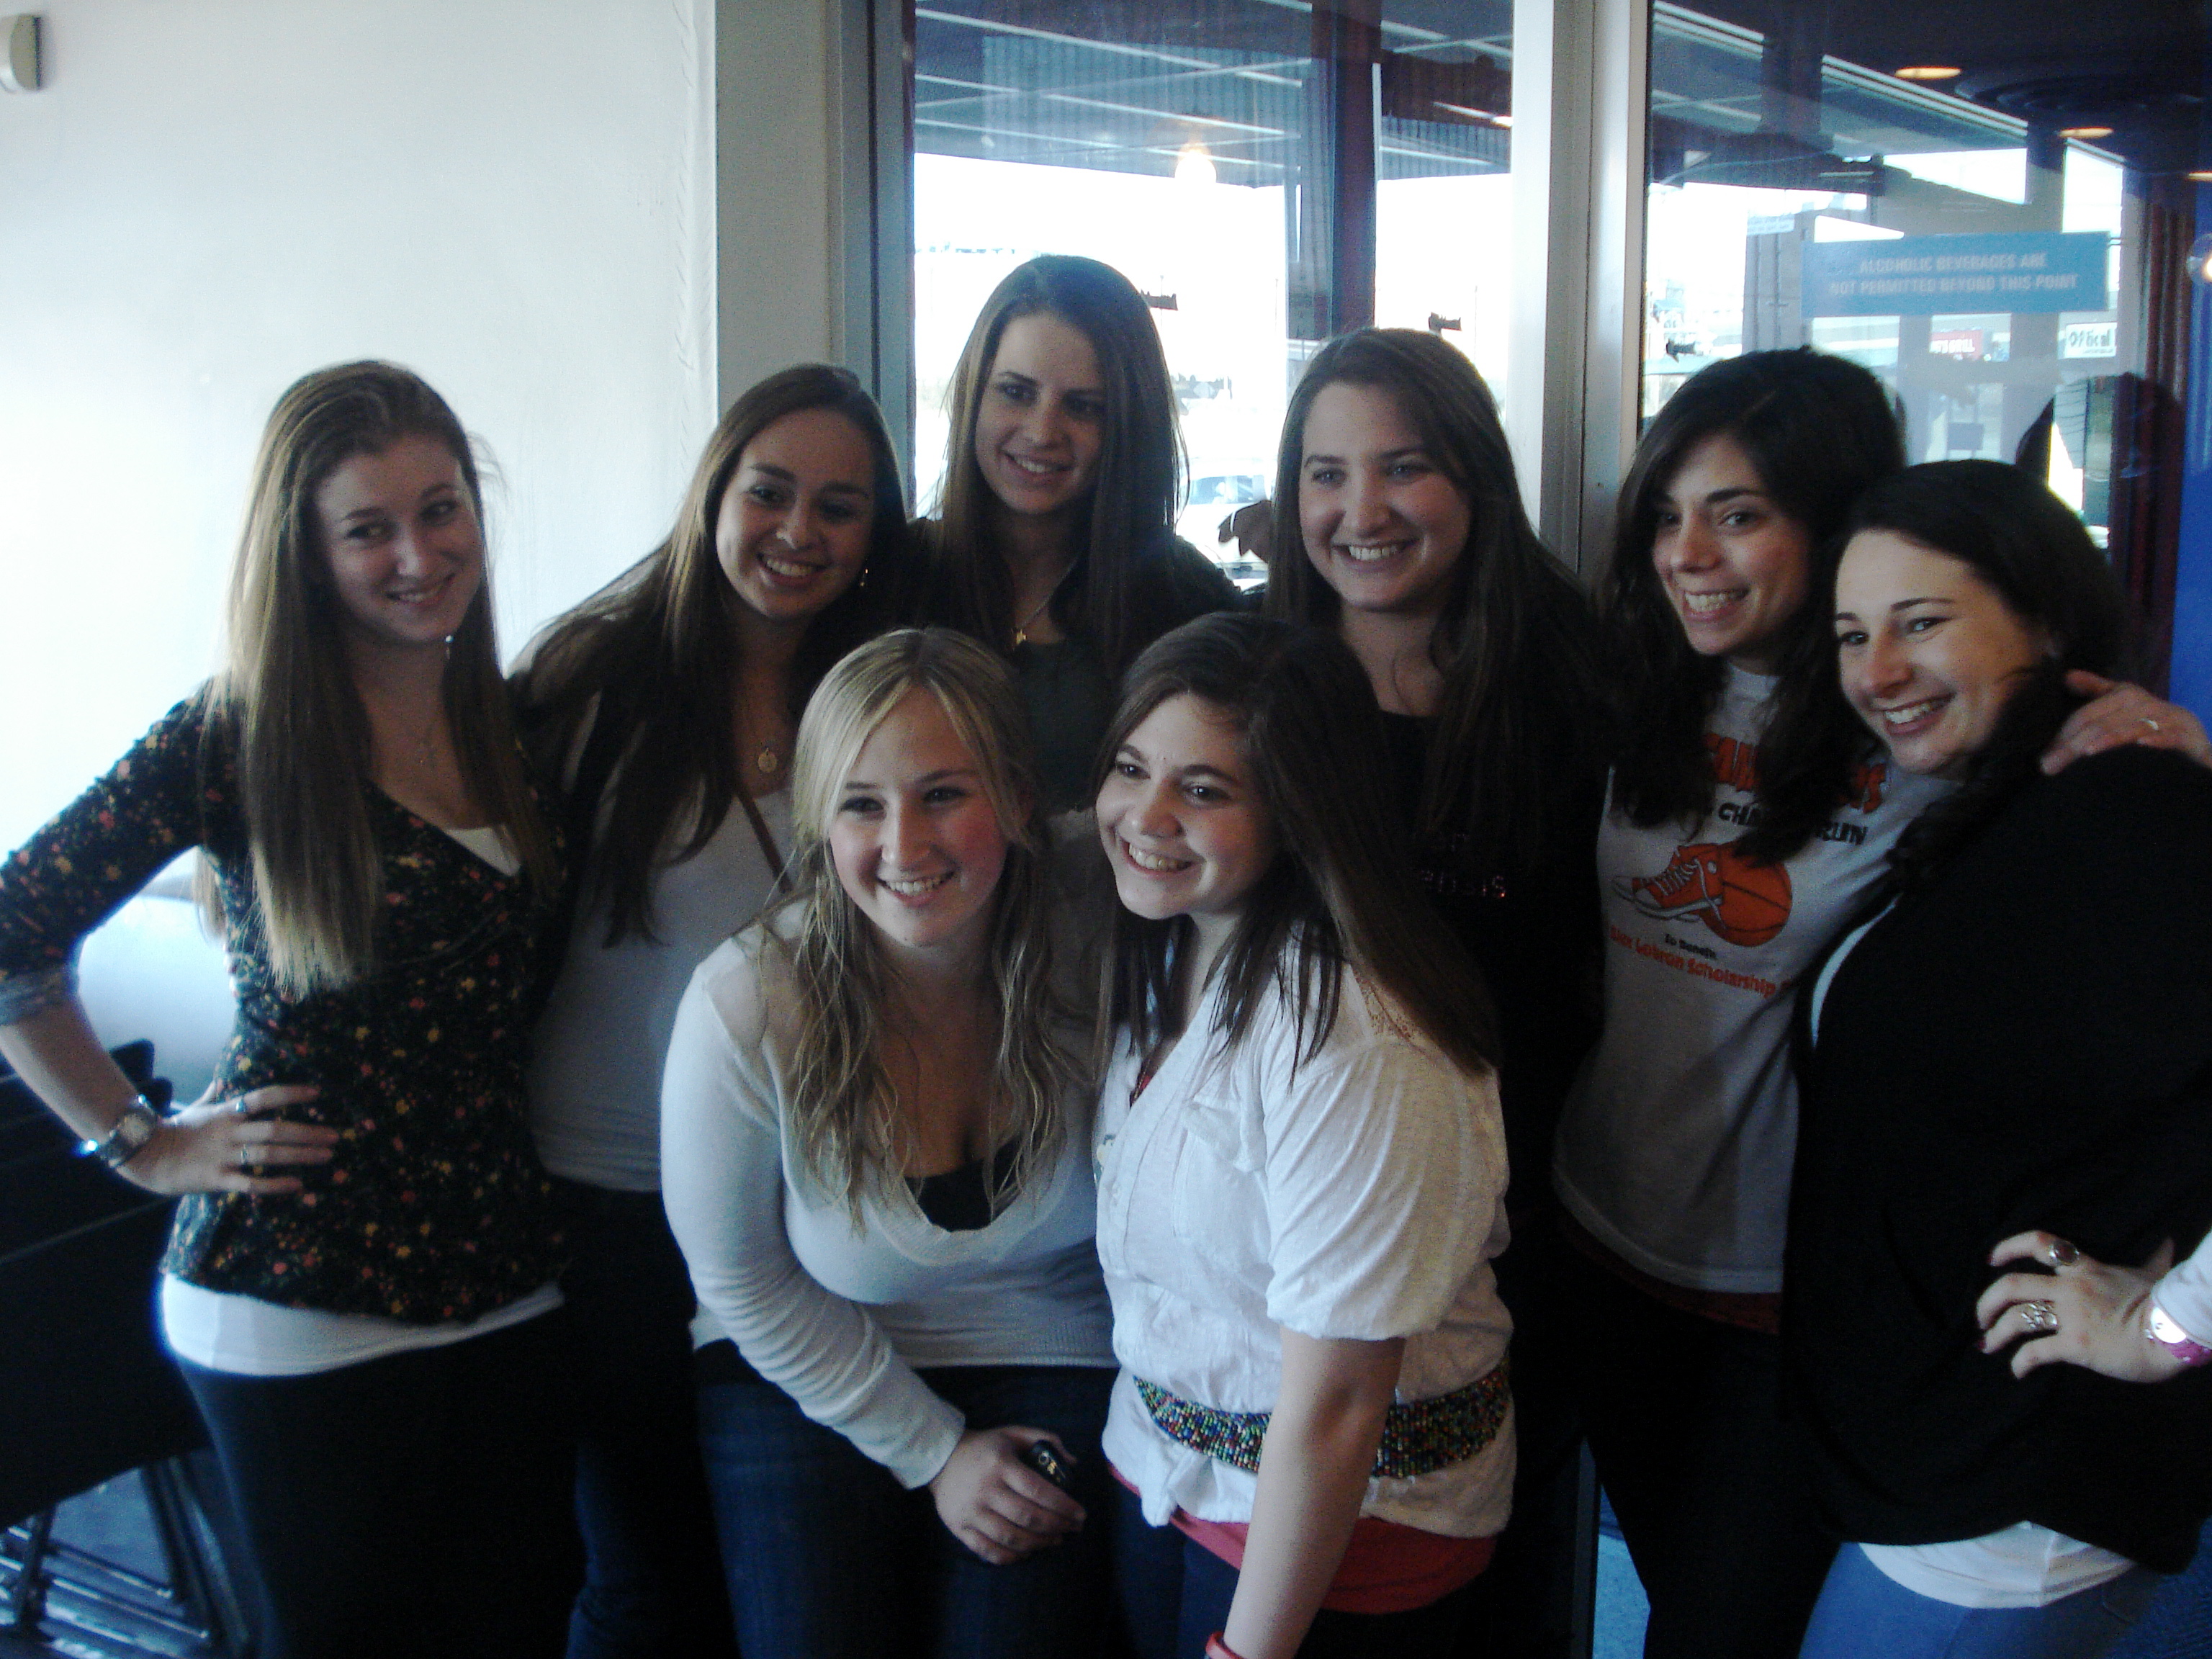 L-R: Rachel, Brittany, Brooke, Hannah, Becky, Cara, Karen, and Rebecca, all having a blast at the reunion!